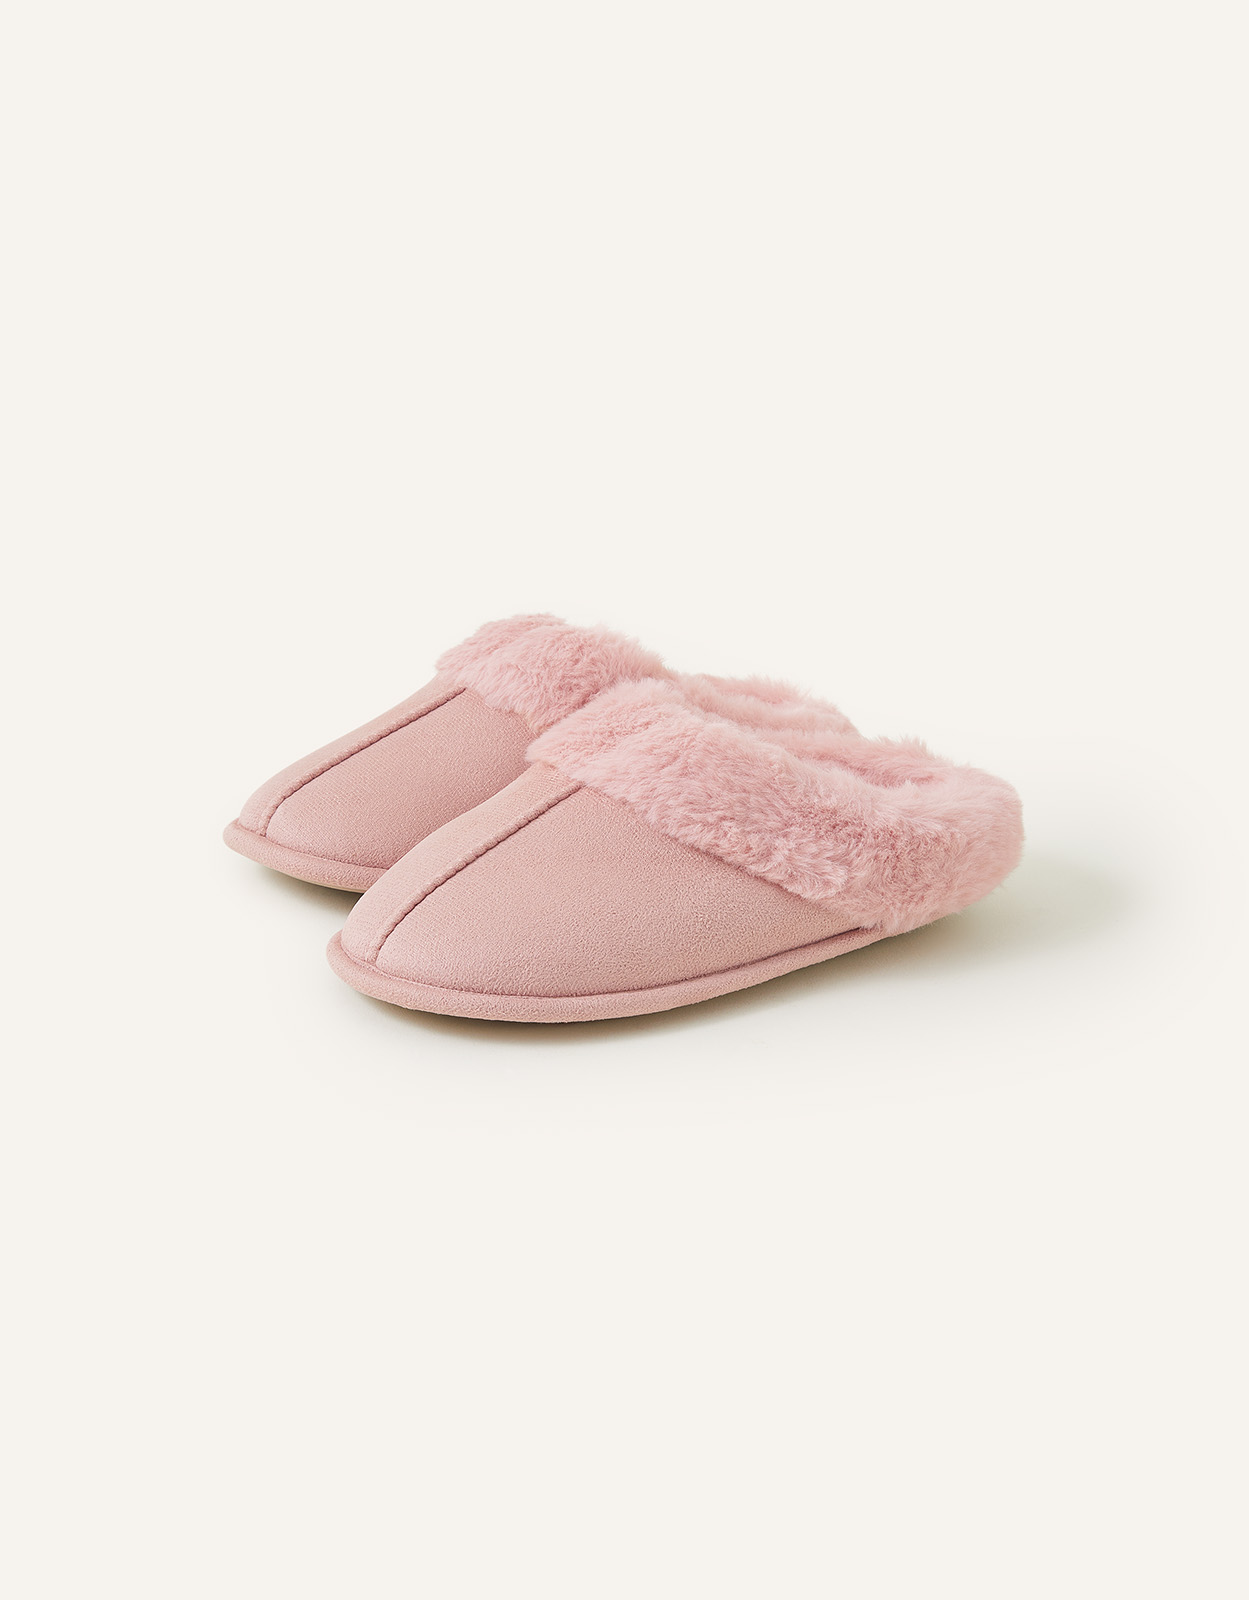 Accessorize Faux Fur Mule Slippers Pink, Size: M